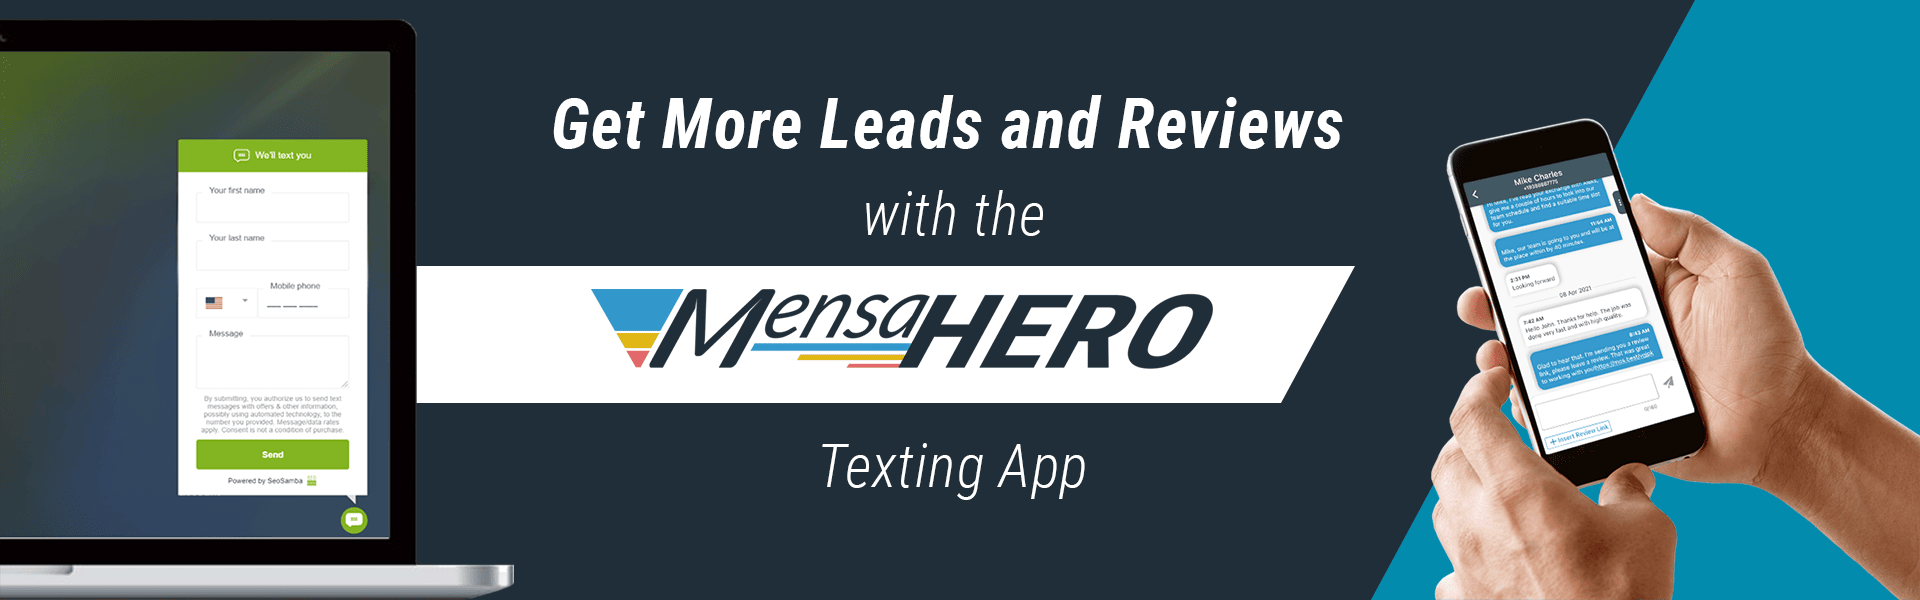 slid_4_mensahero-texting-app